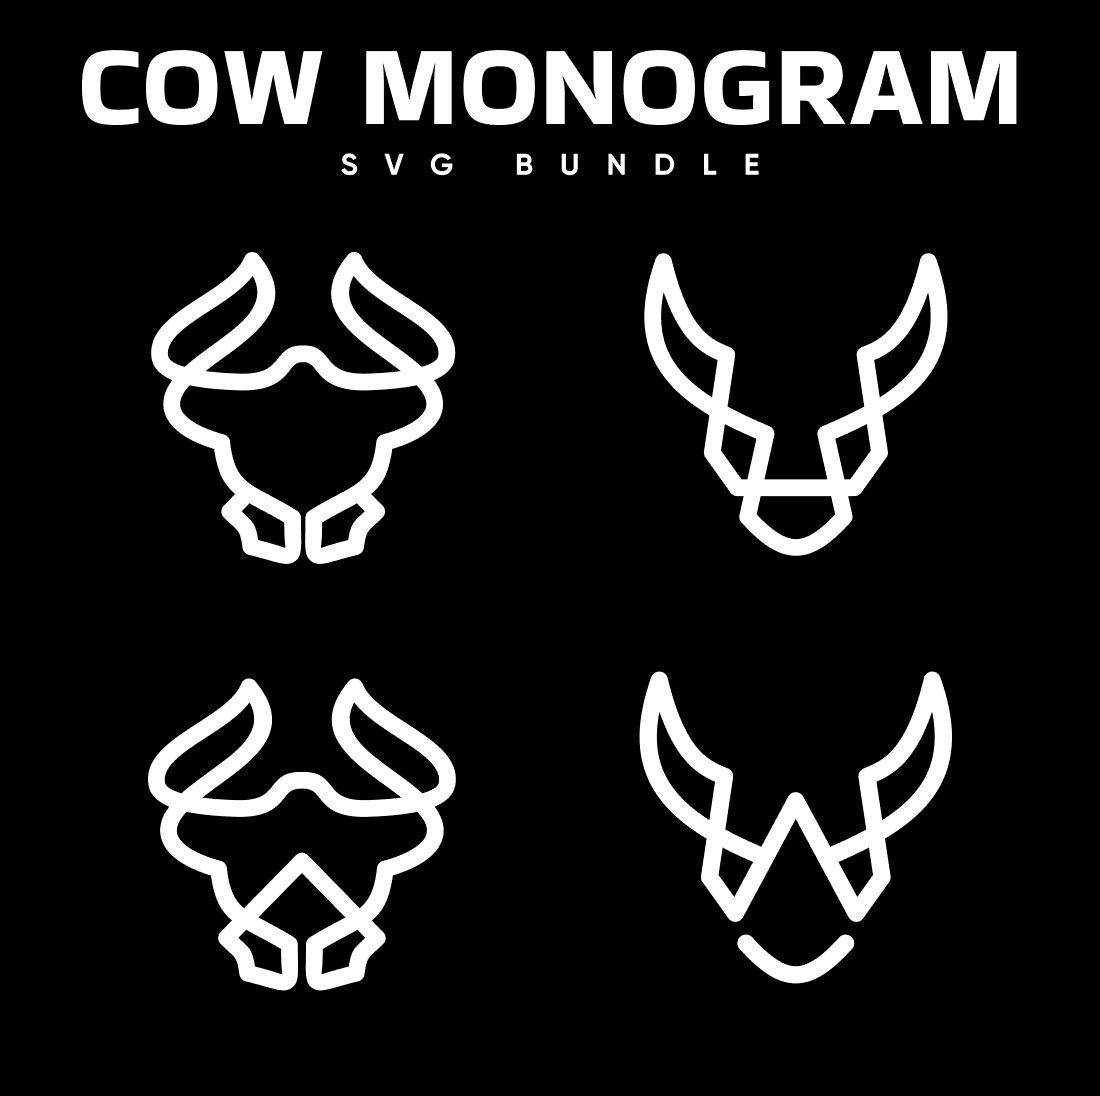 Black and white photo of a cow monogram logo.